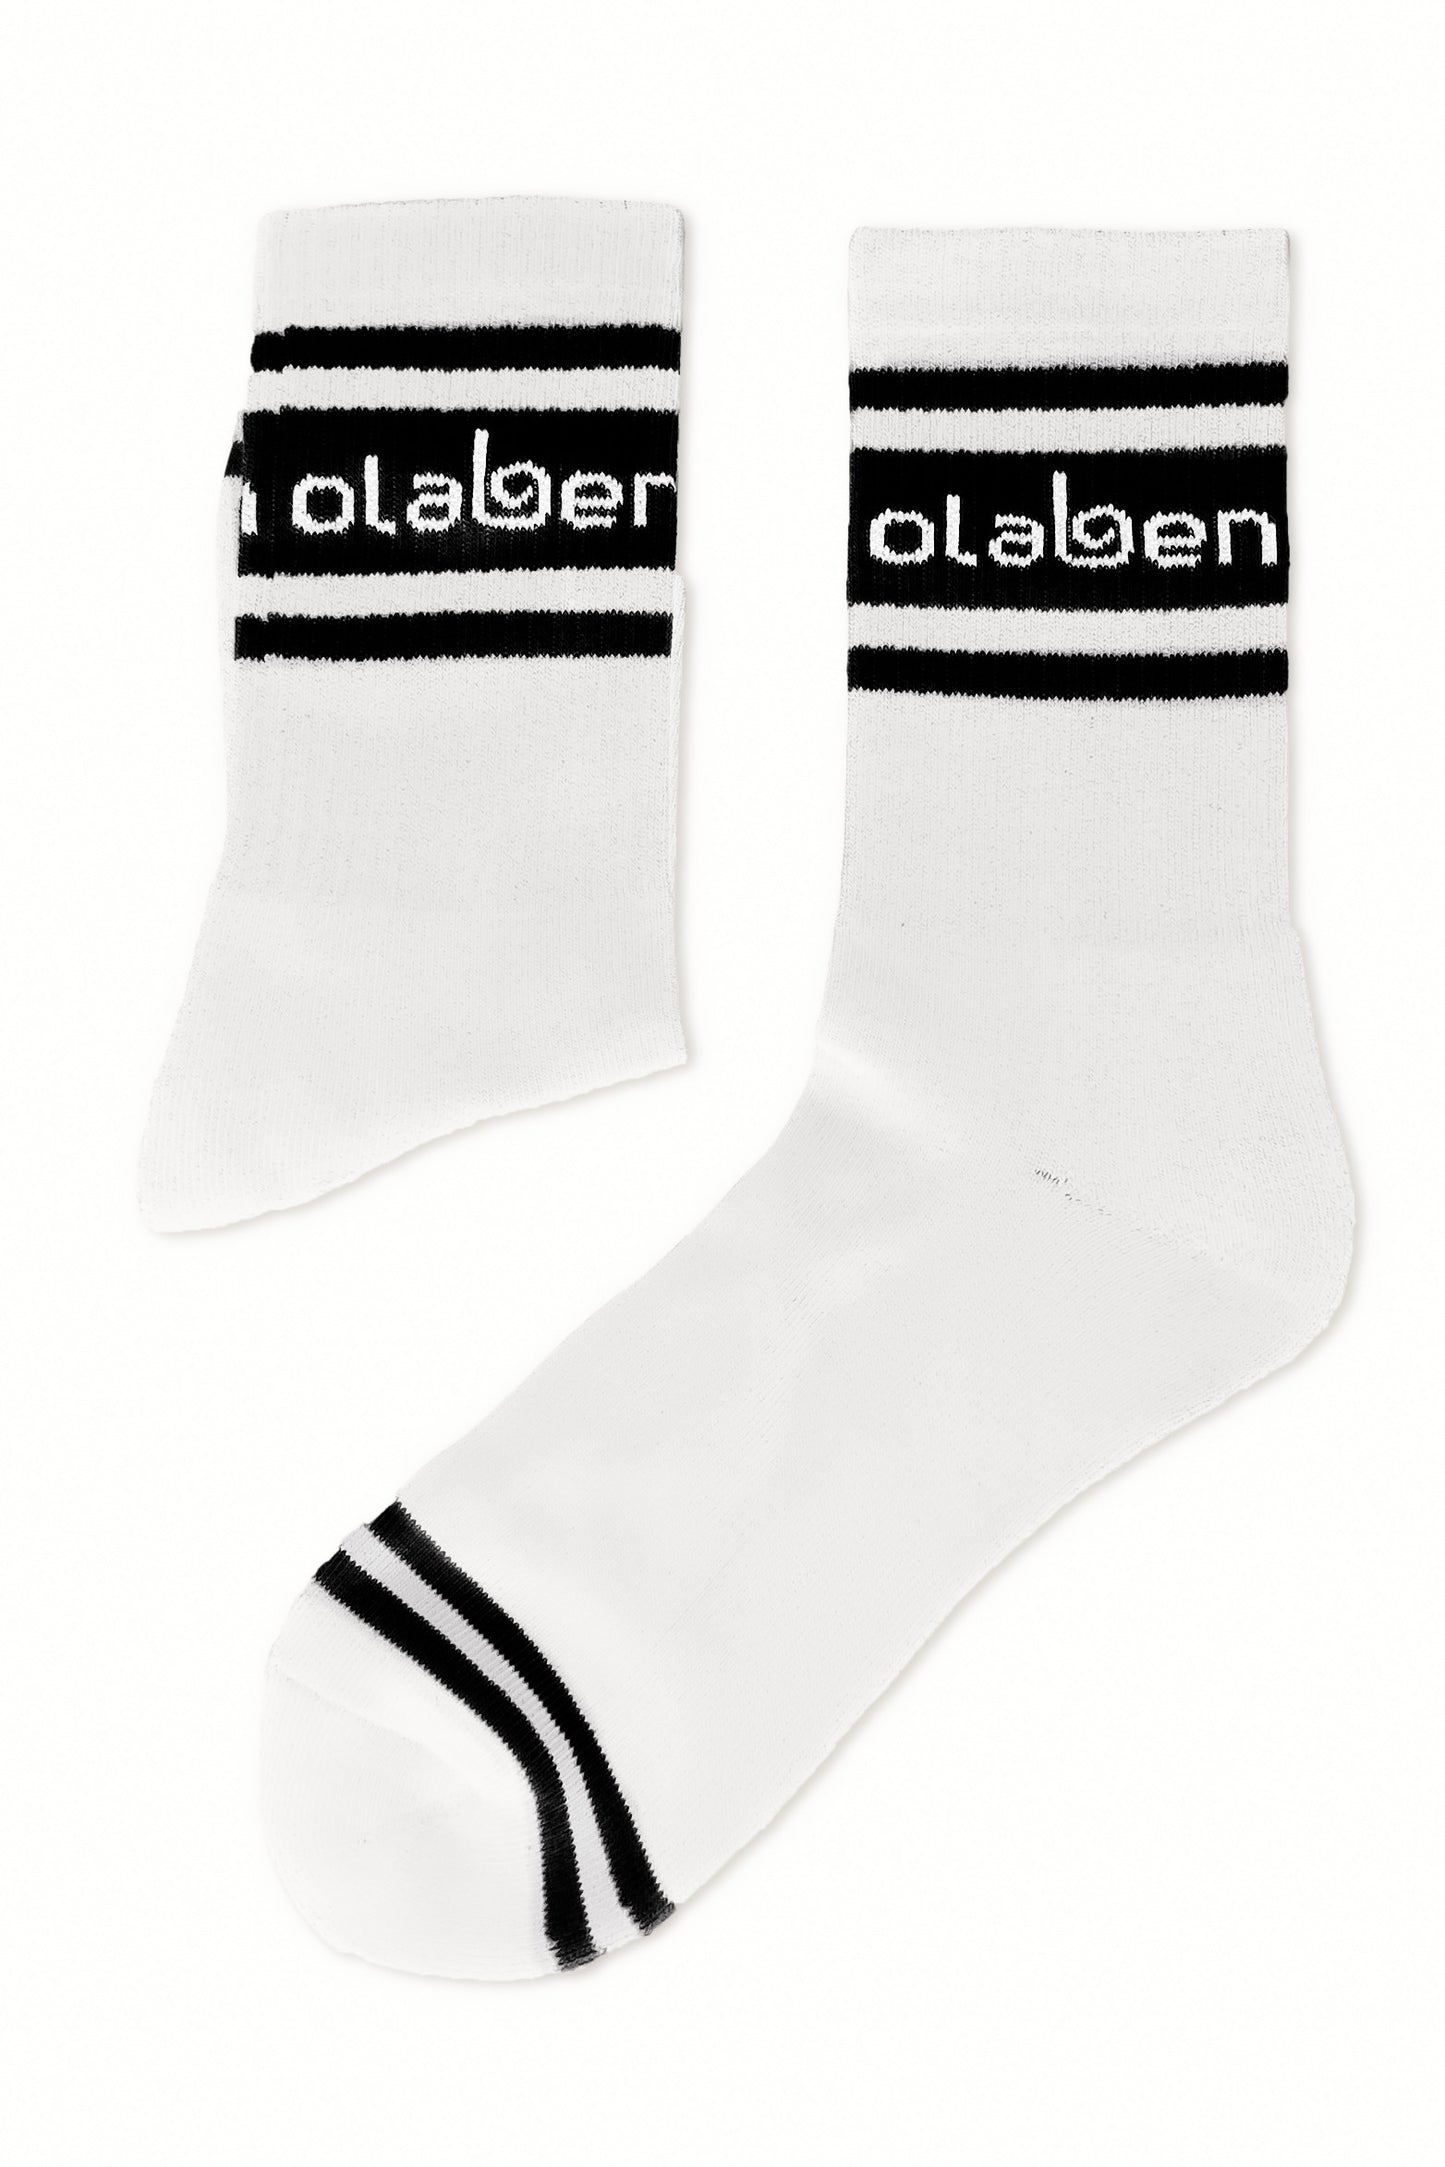 Cozine quarter sock in white color option.